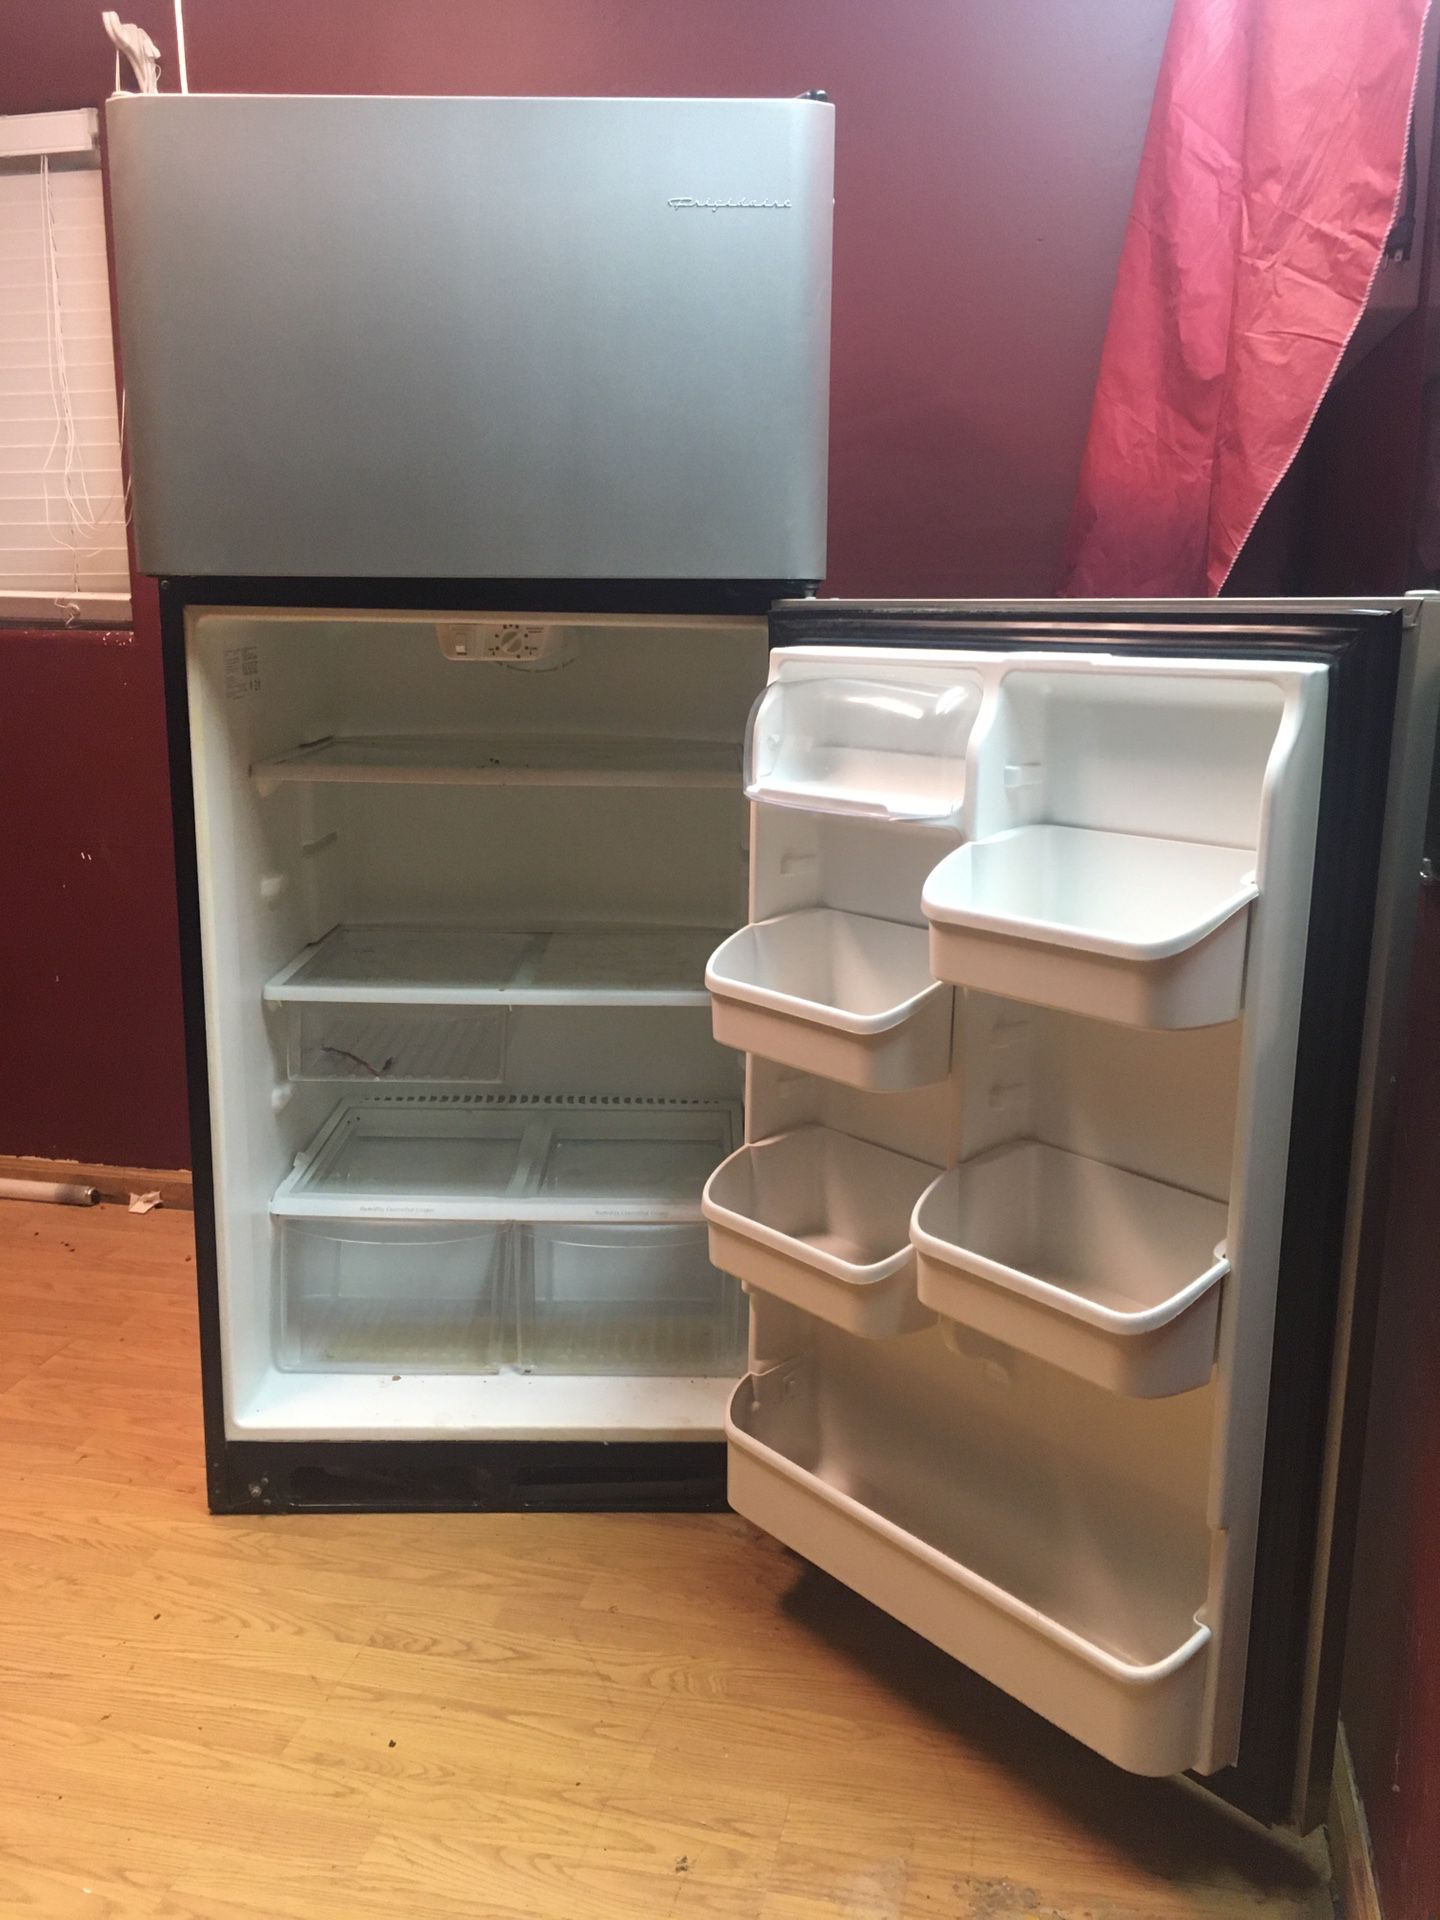 Cold Refrigerator